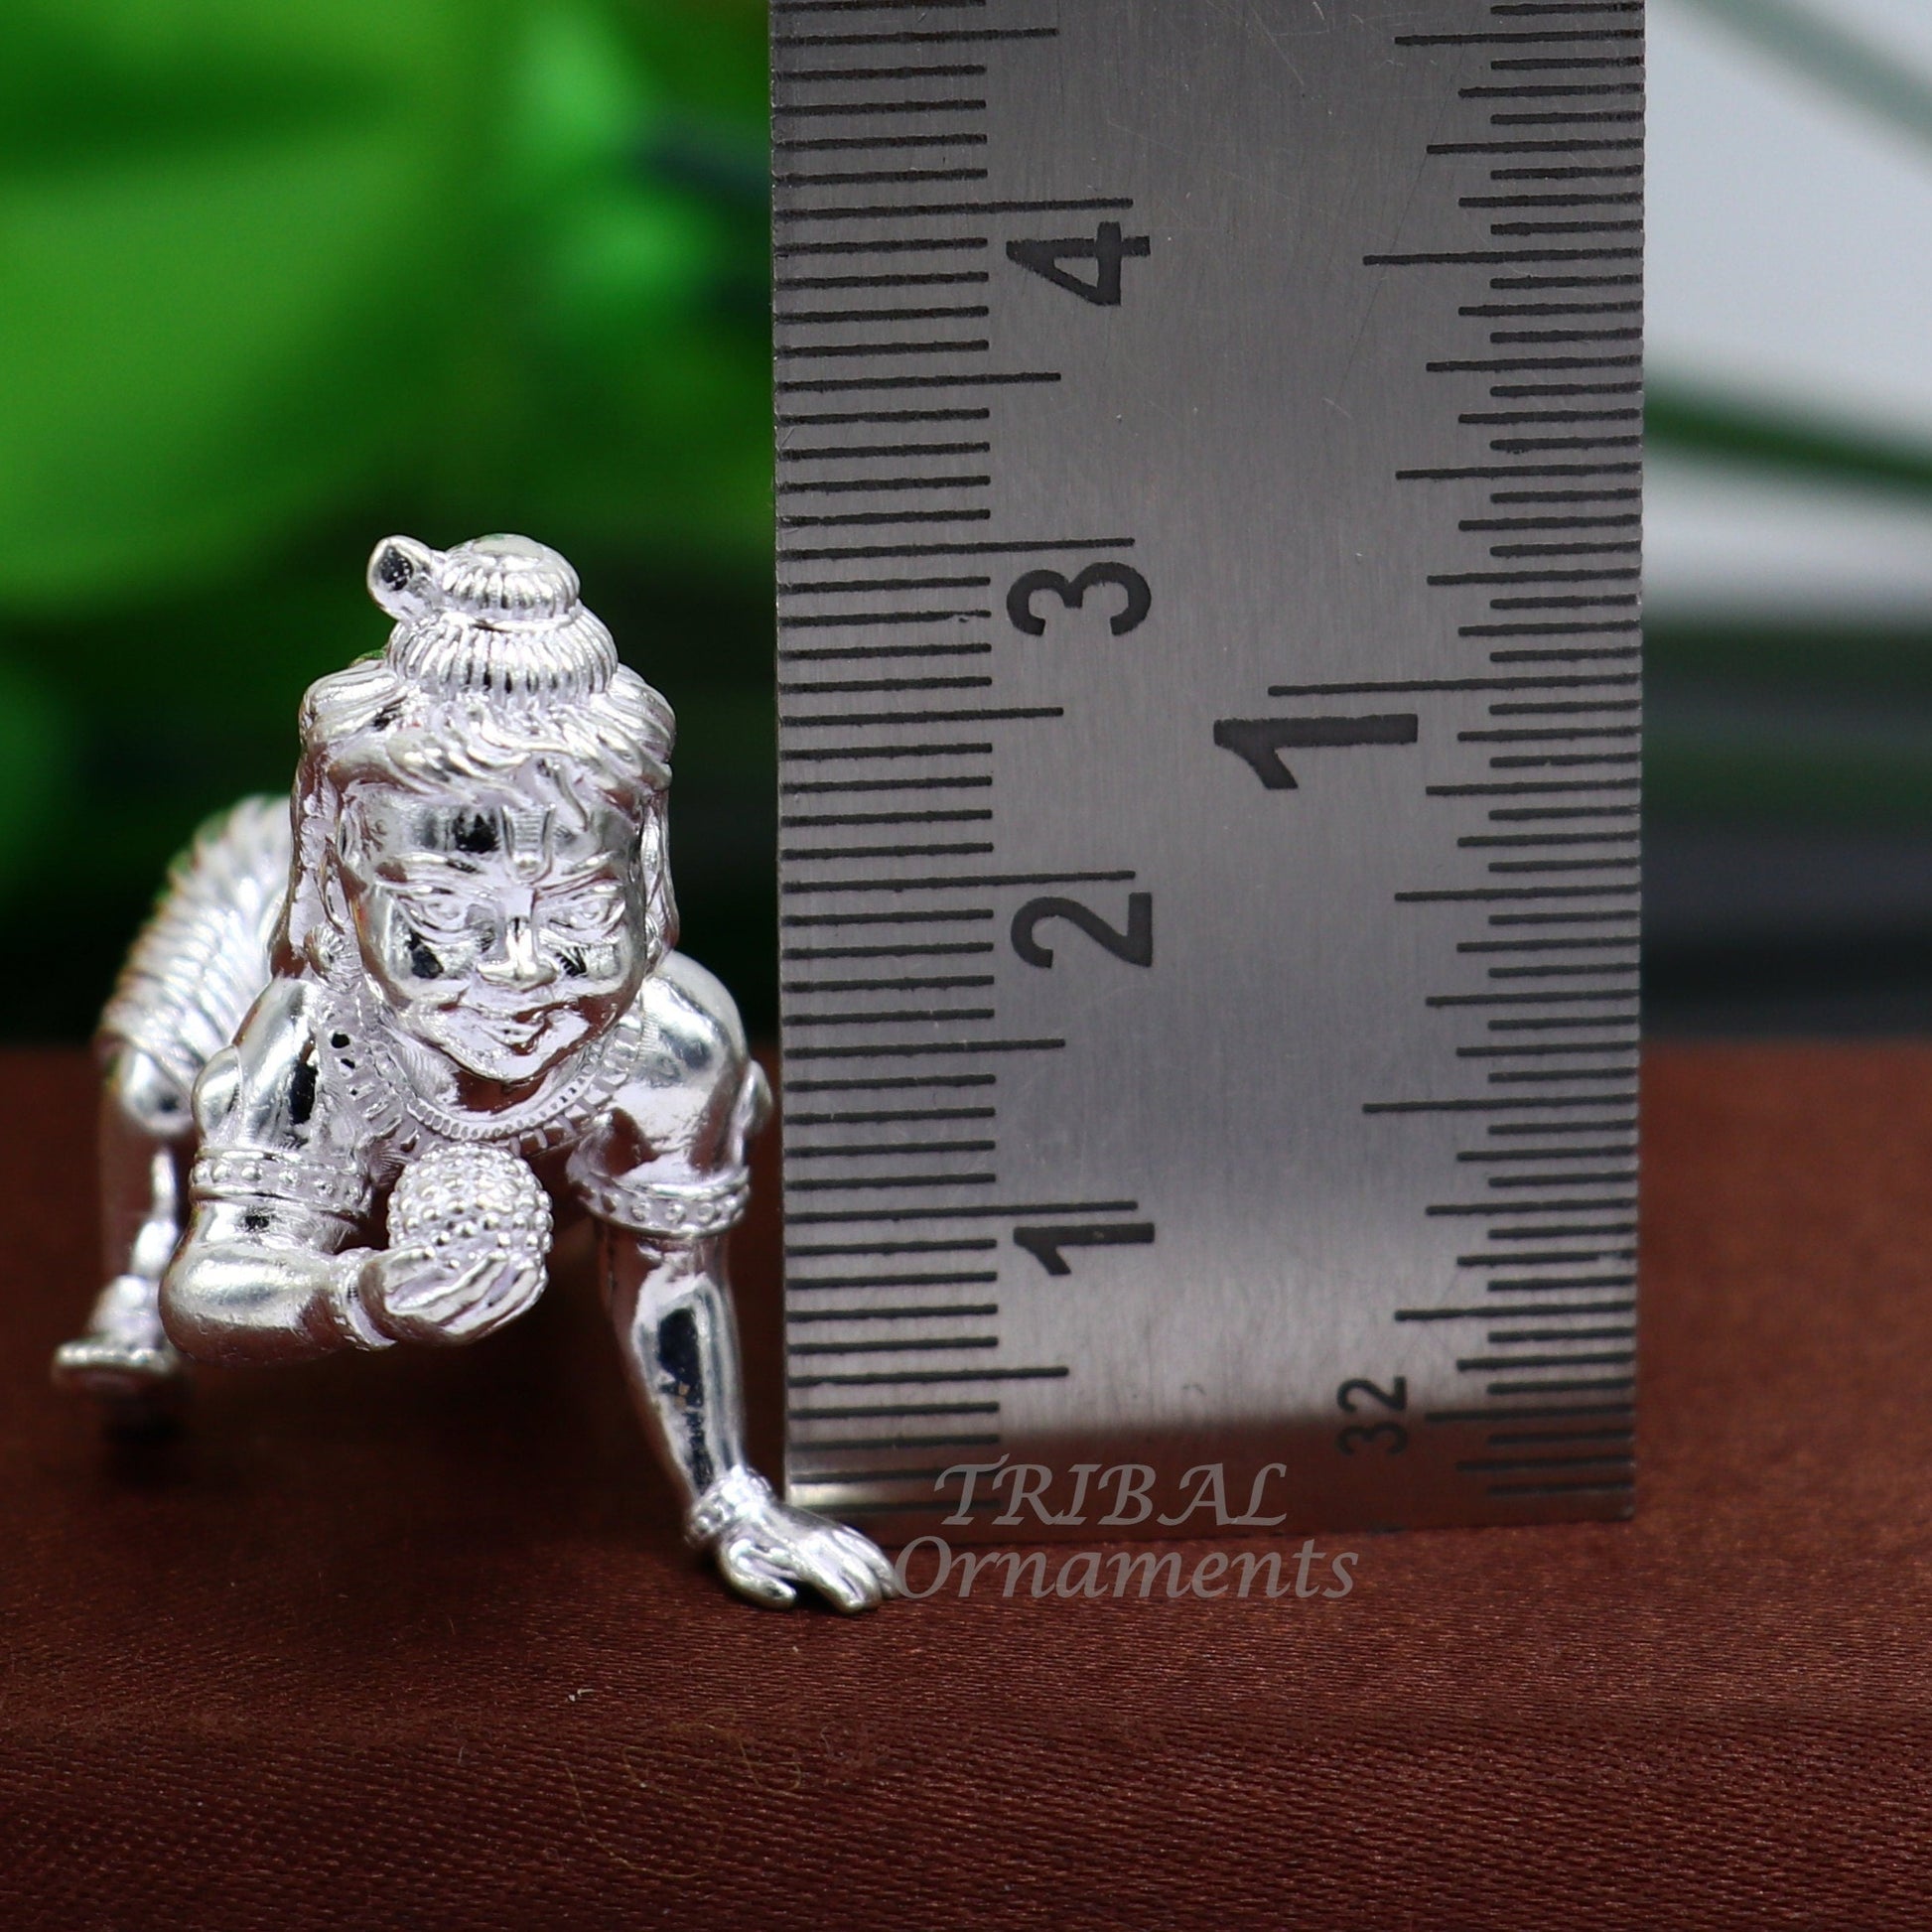 925 Sterling silver Idol Krishna Bal Gopala crawling Krishna statue figurine, child krishna laddu gopala sculpture, silver article art582 - TRIBAL ORNAMENTS